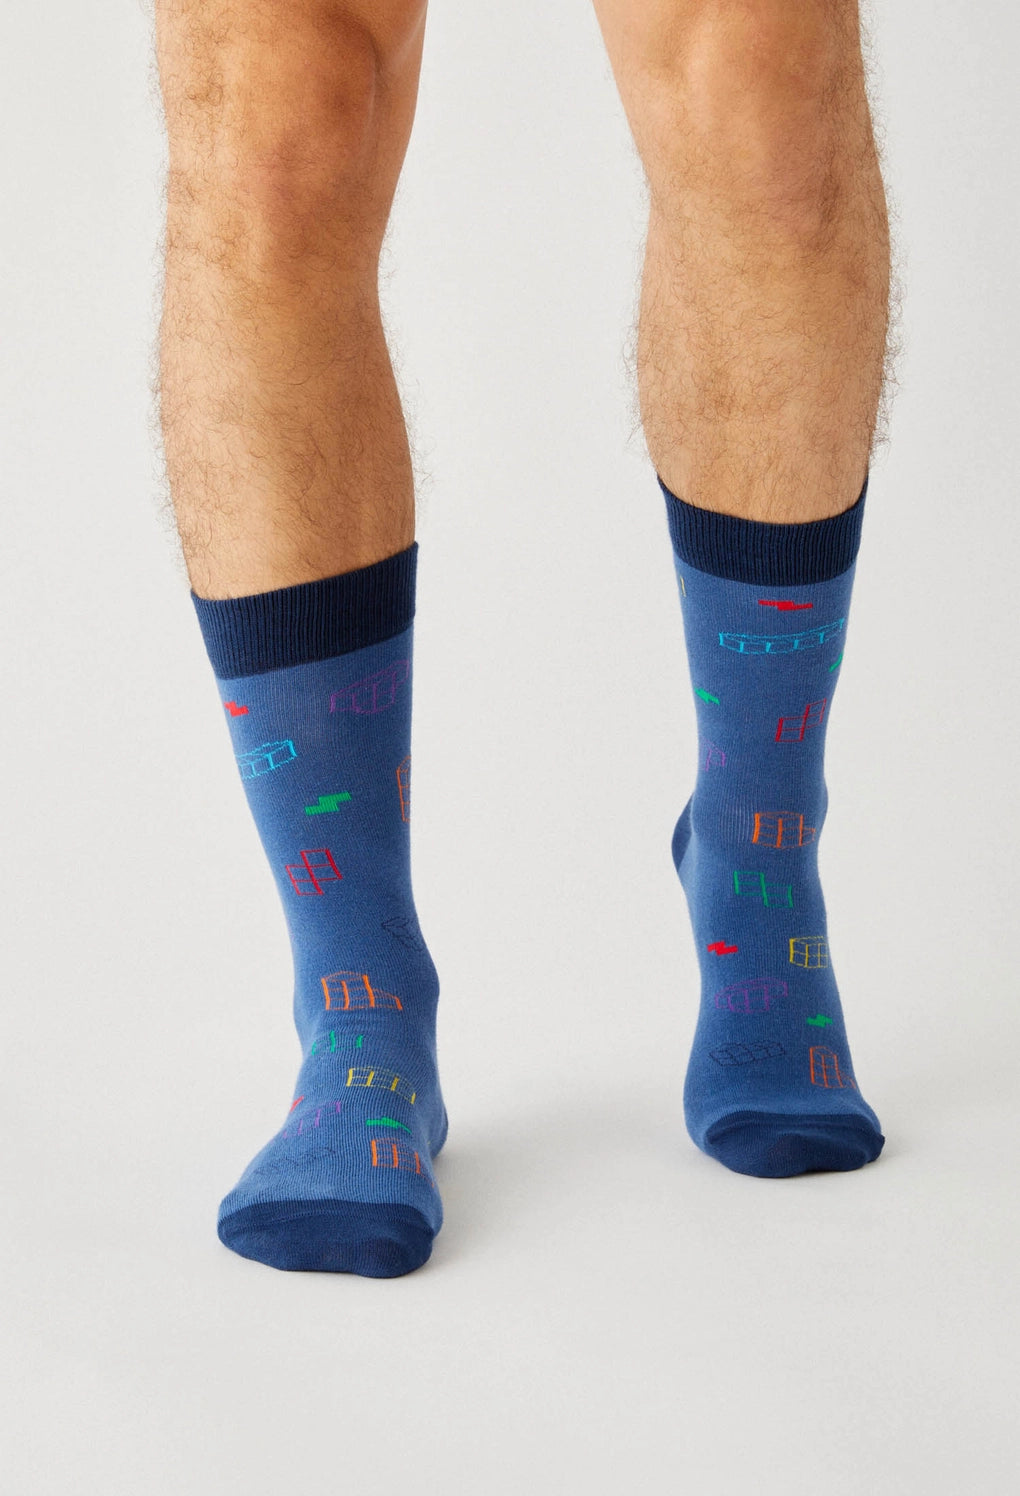 Set socks Tetris